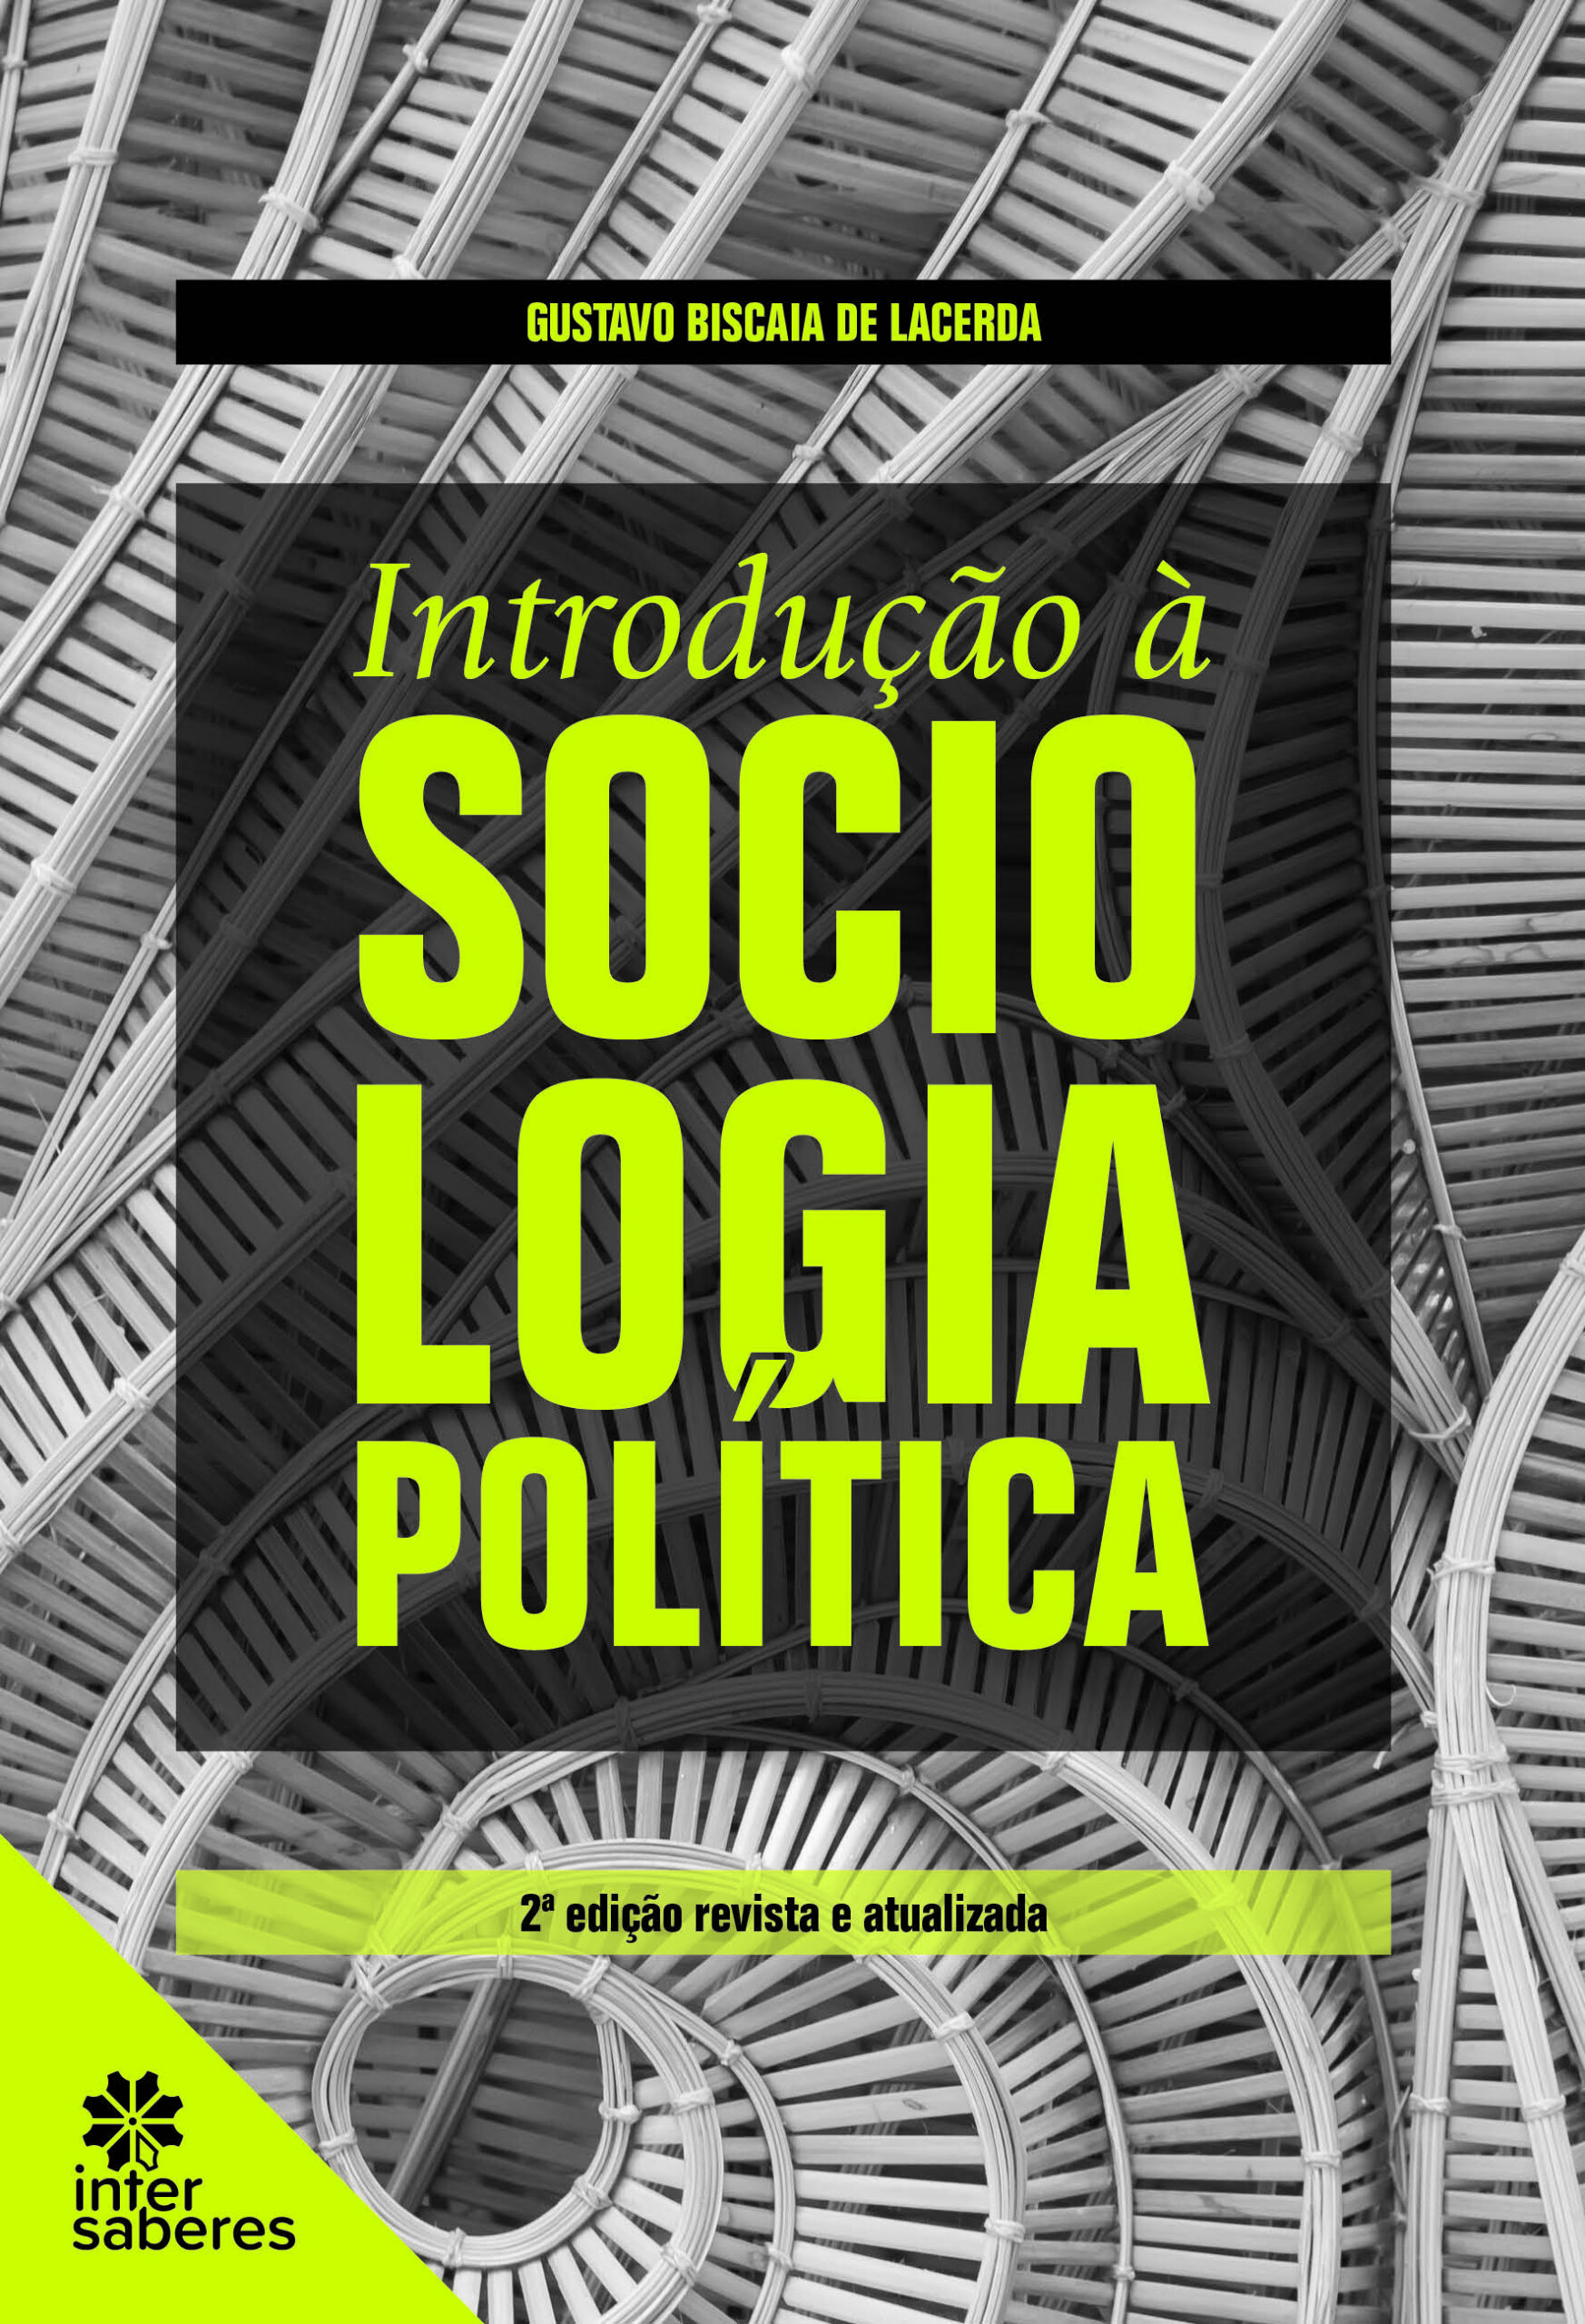 Moderna_Plus_Sociologia_EM_MP - Flipbook by atendimentotec